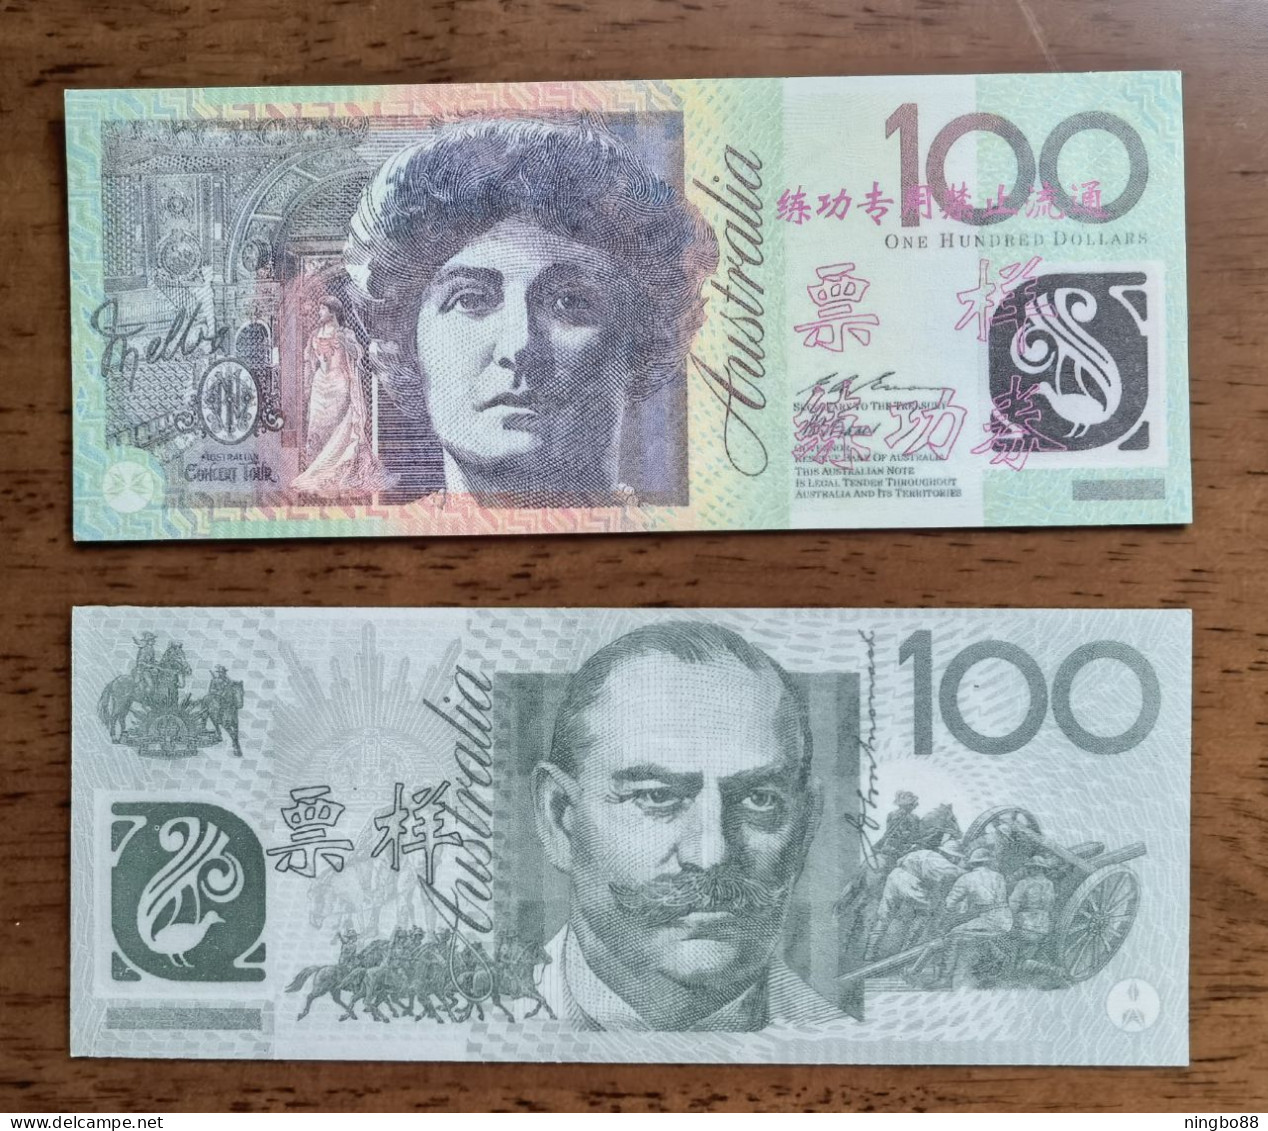 China BOC Bank (bank Of China) Training/test Banknote,AUSTRALIA B-2 Series 100 Dollars Note Specimen Overprint - Ficticios & Especimenes